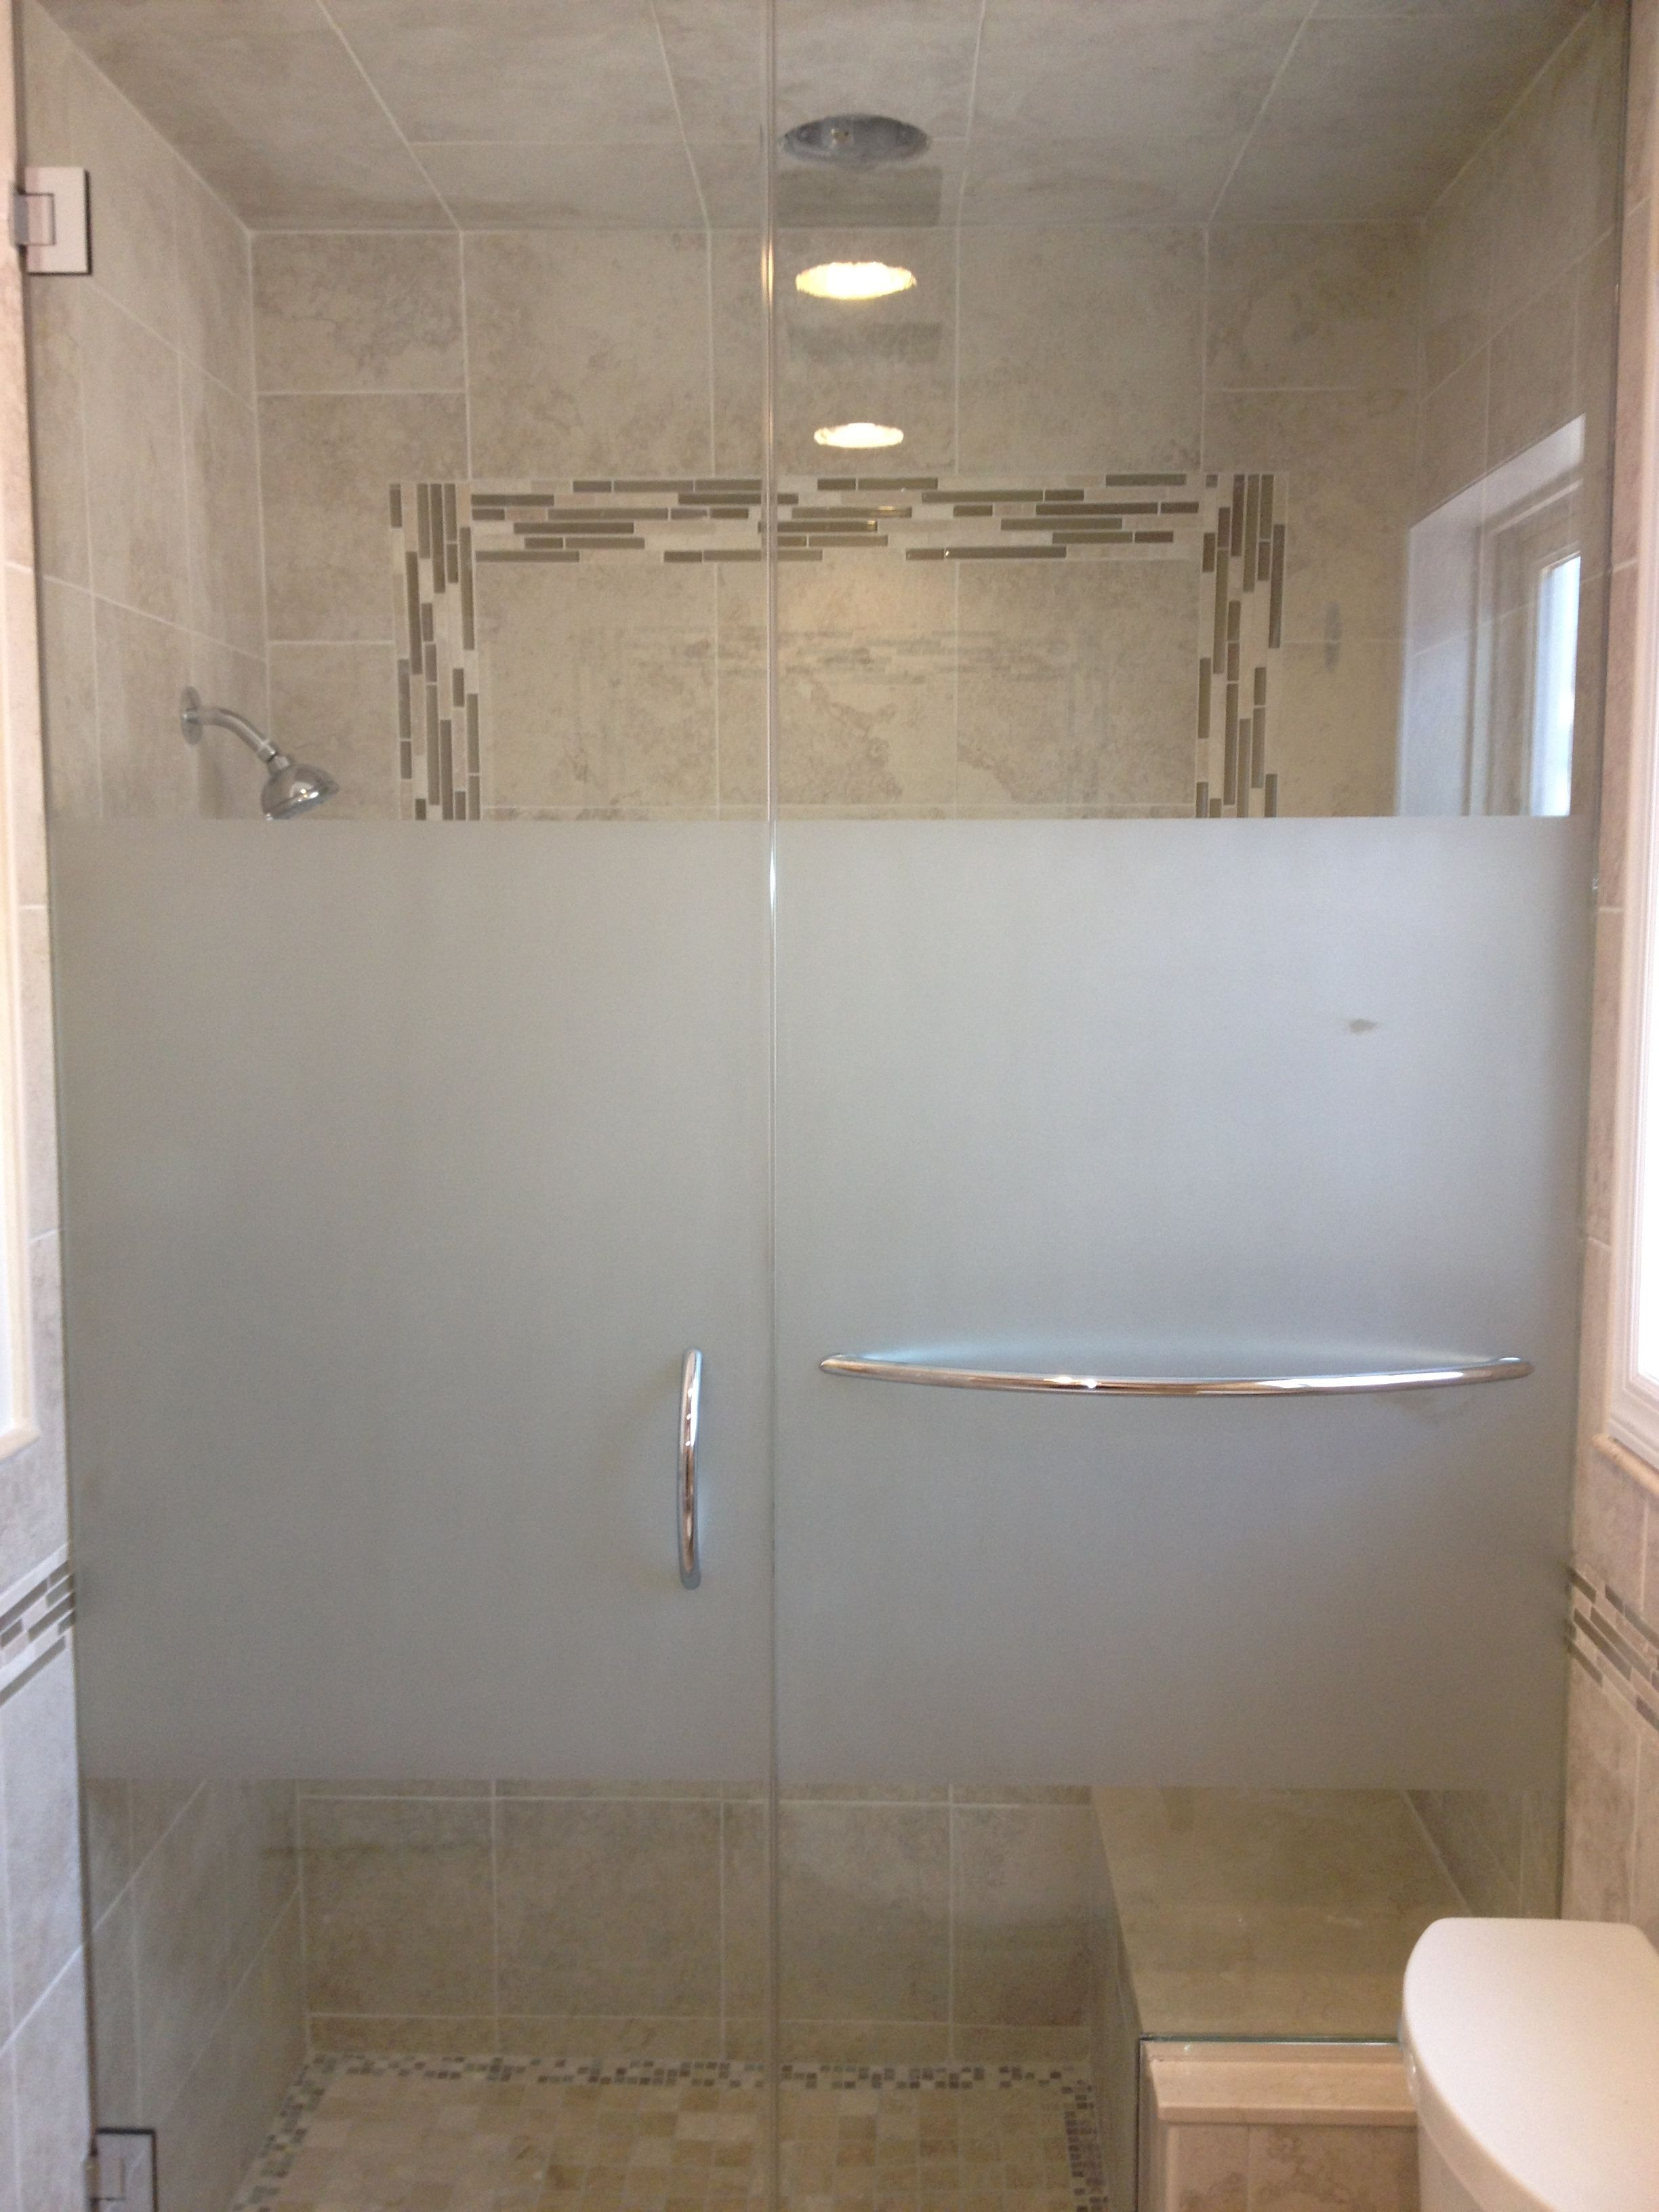 Modren Frosted Shower Doors Glass Pattern F For Design Inspiration regarding measurements 2448 X 3264